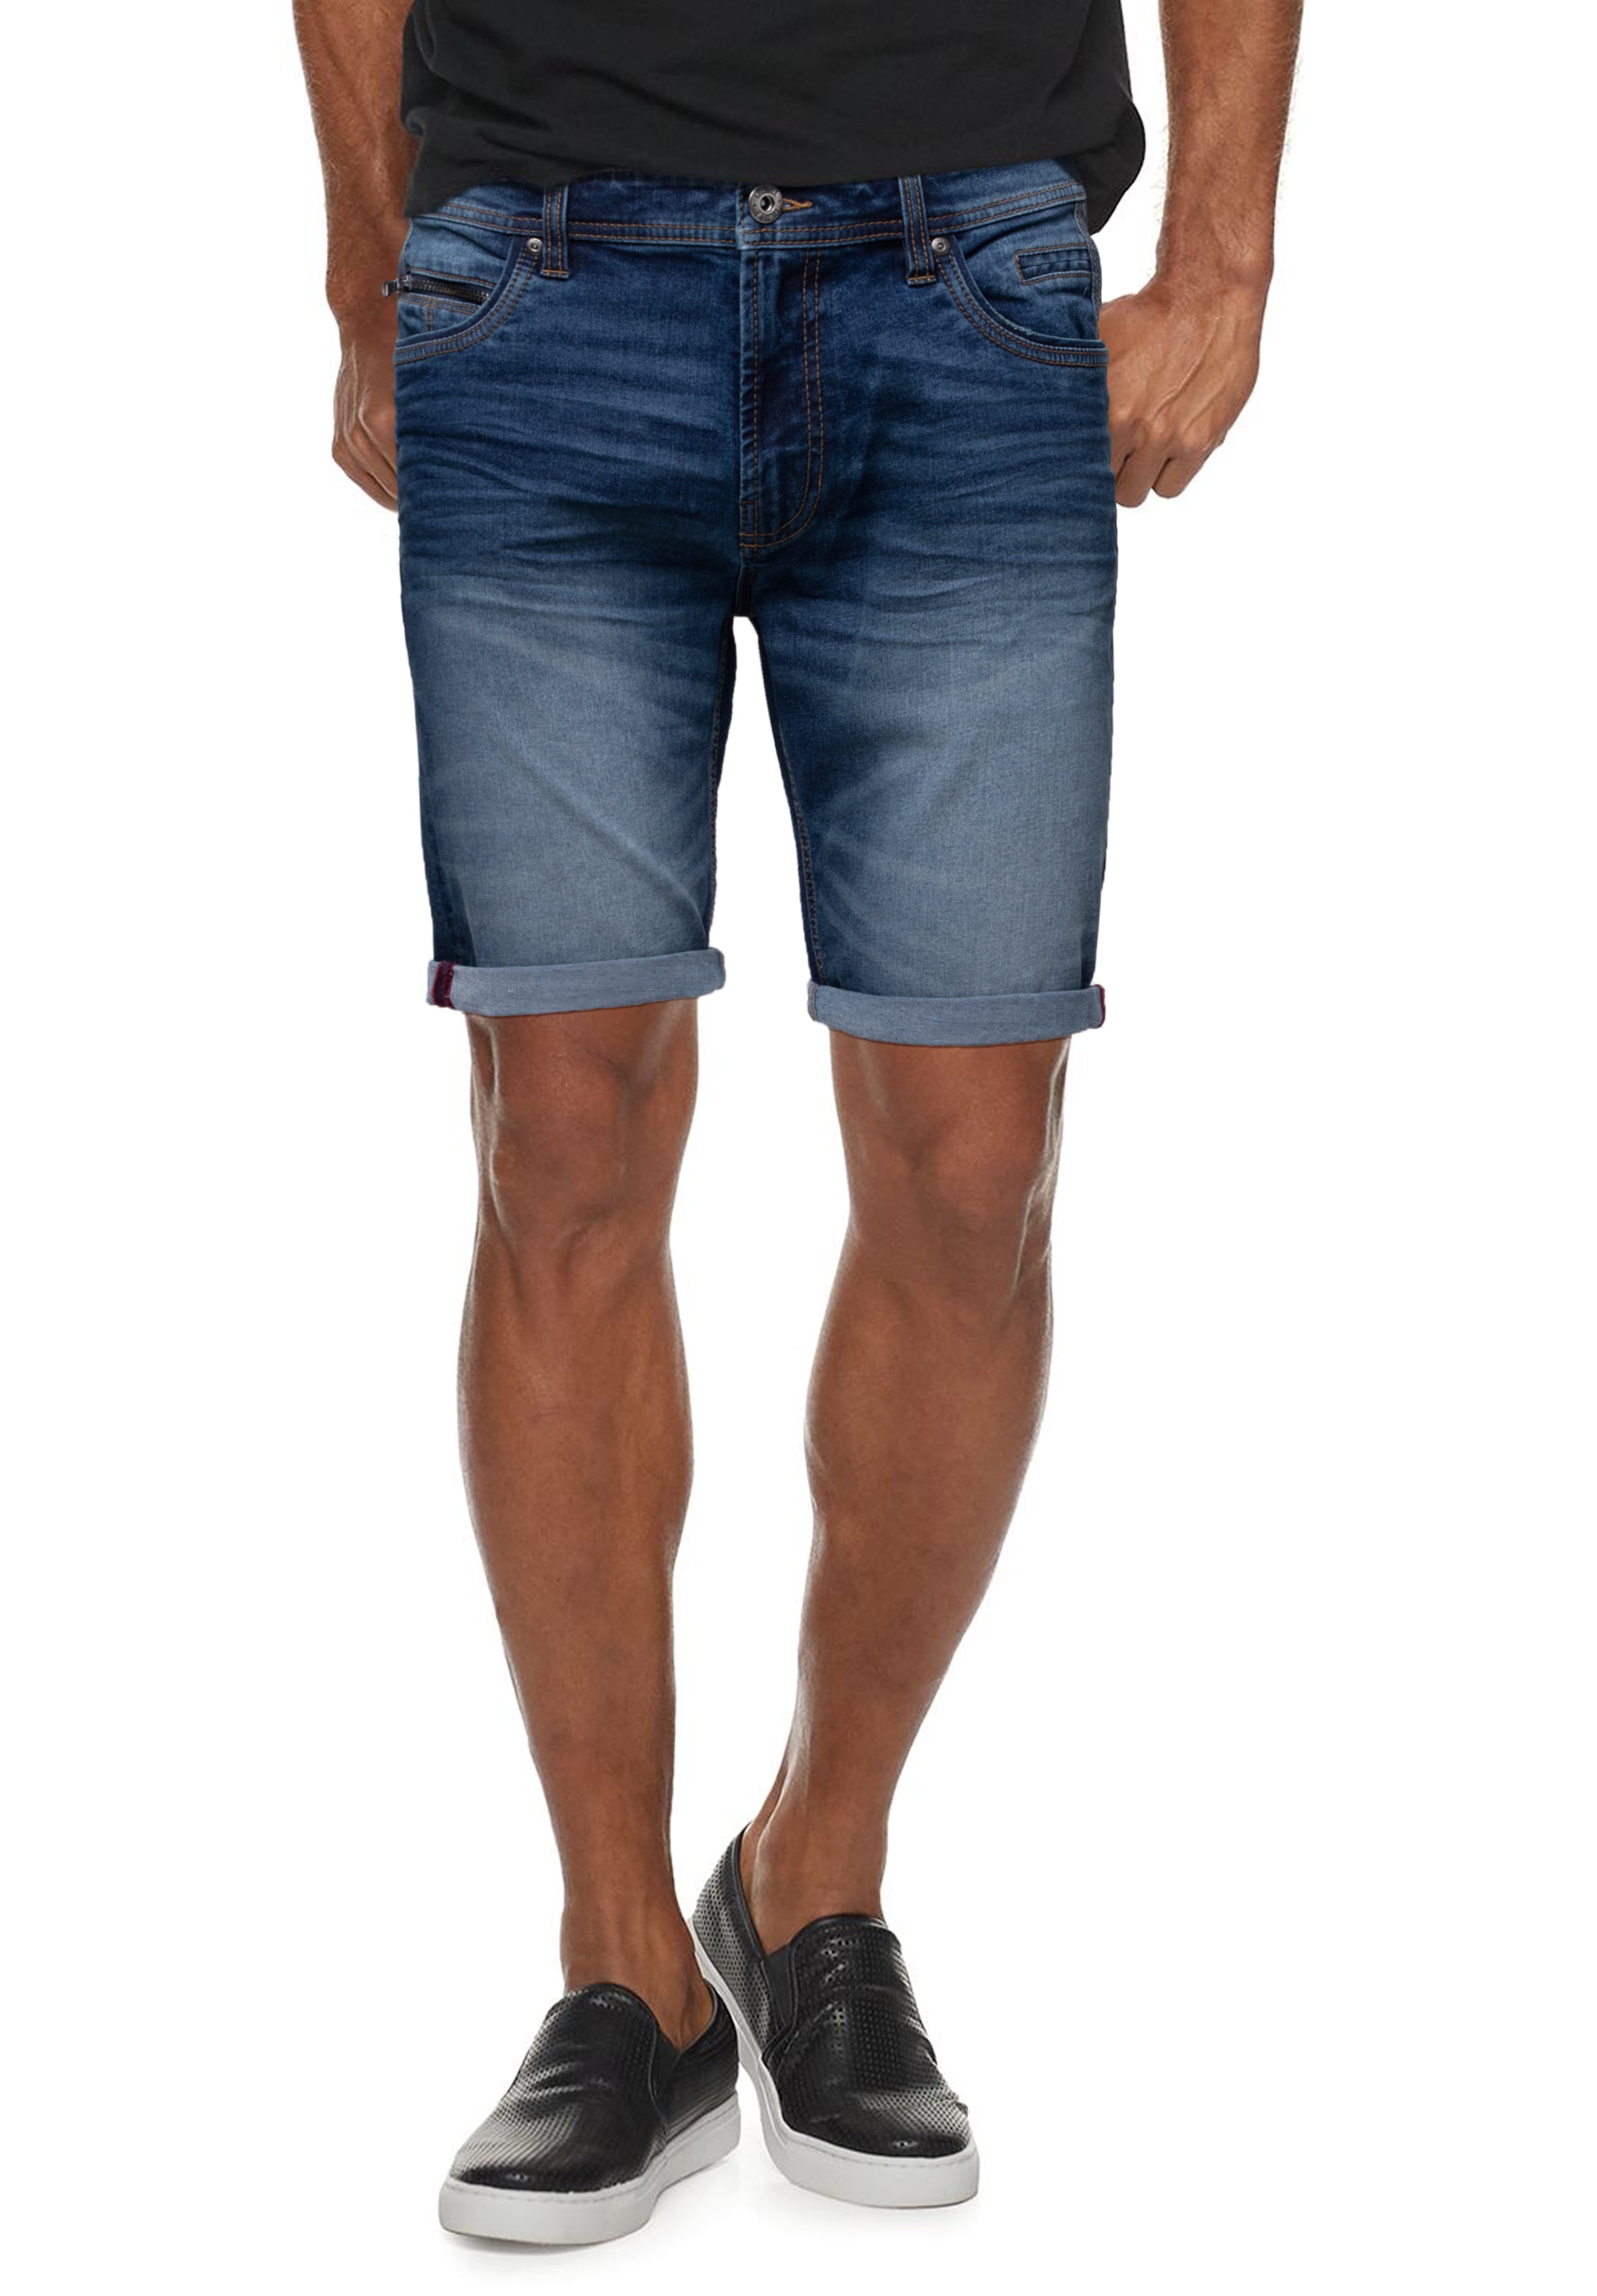 CULTURA Men's Denim Shorts Fashion Roll Up Slim Fit Modern Stretch Jean  Shorts for Men 